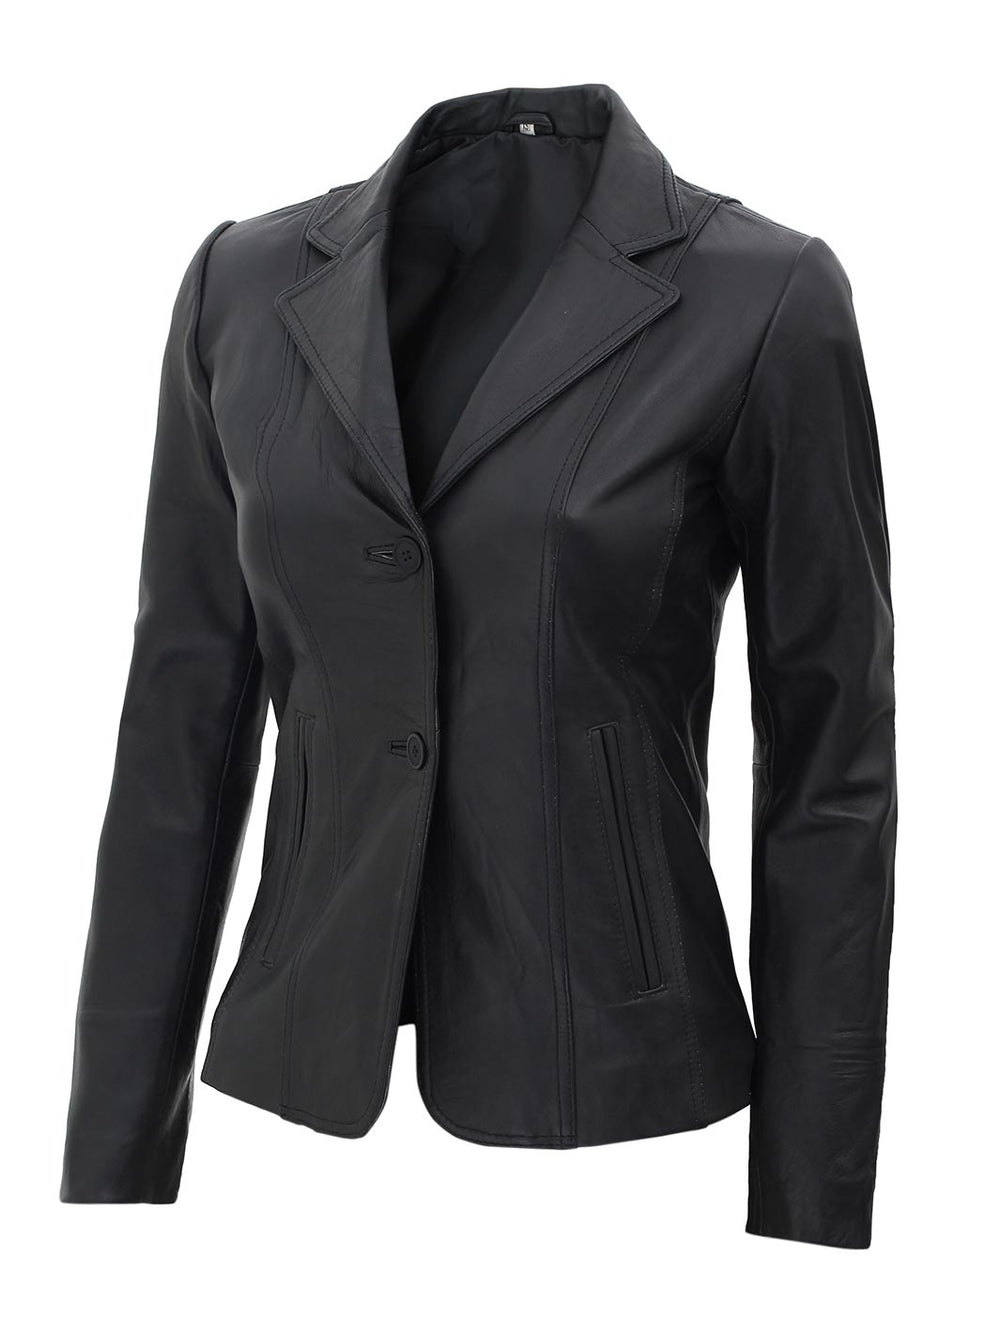 Surrey Damen-Blazerjacke aus schwarzem Leder 